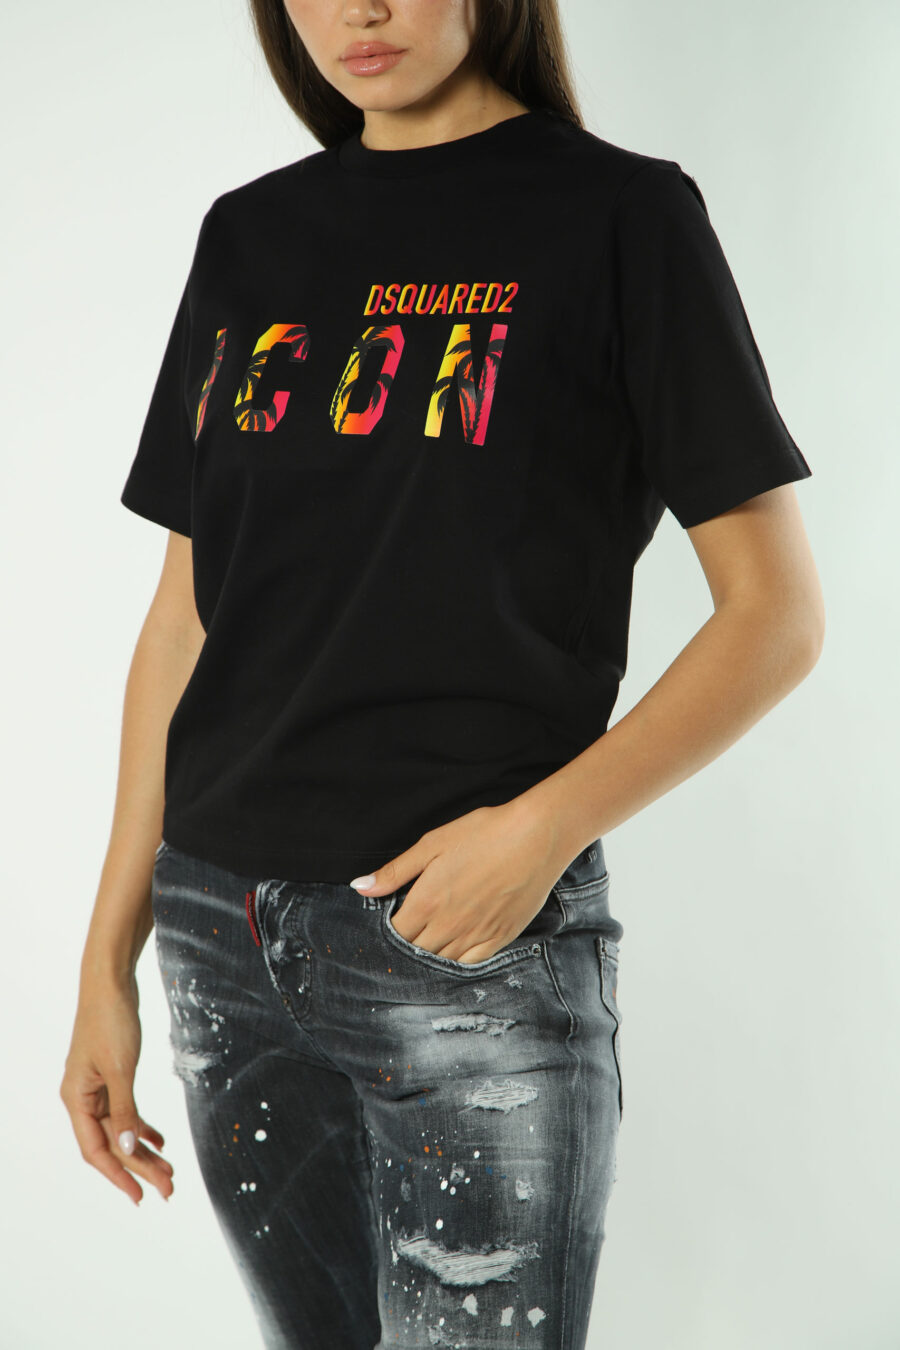 T-shirt preta com duplo logótipo "icon sunset" - Fotos 1534